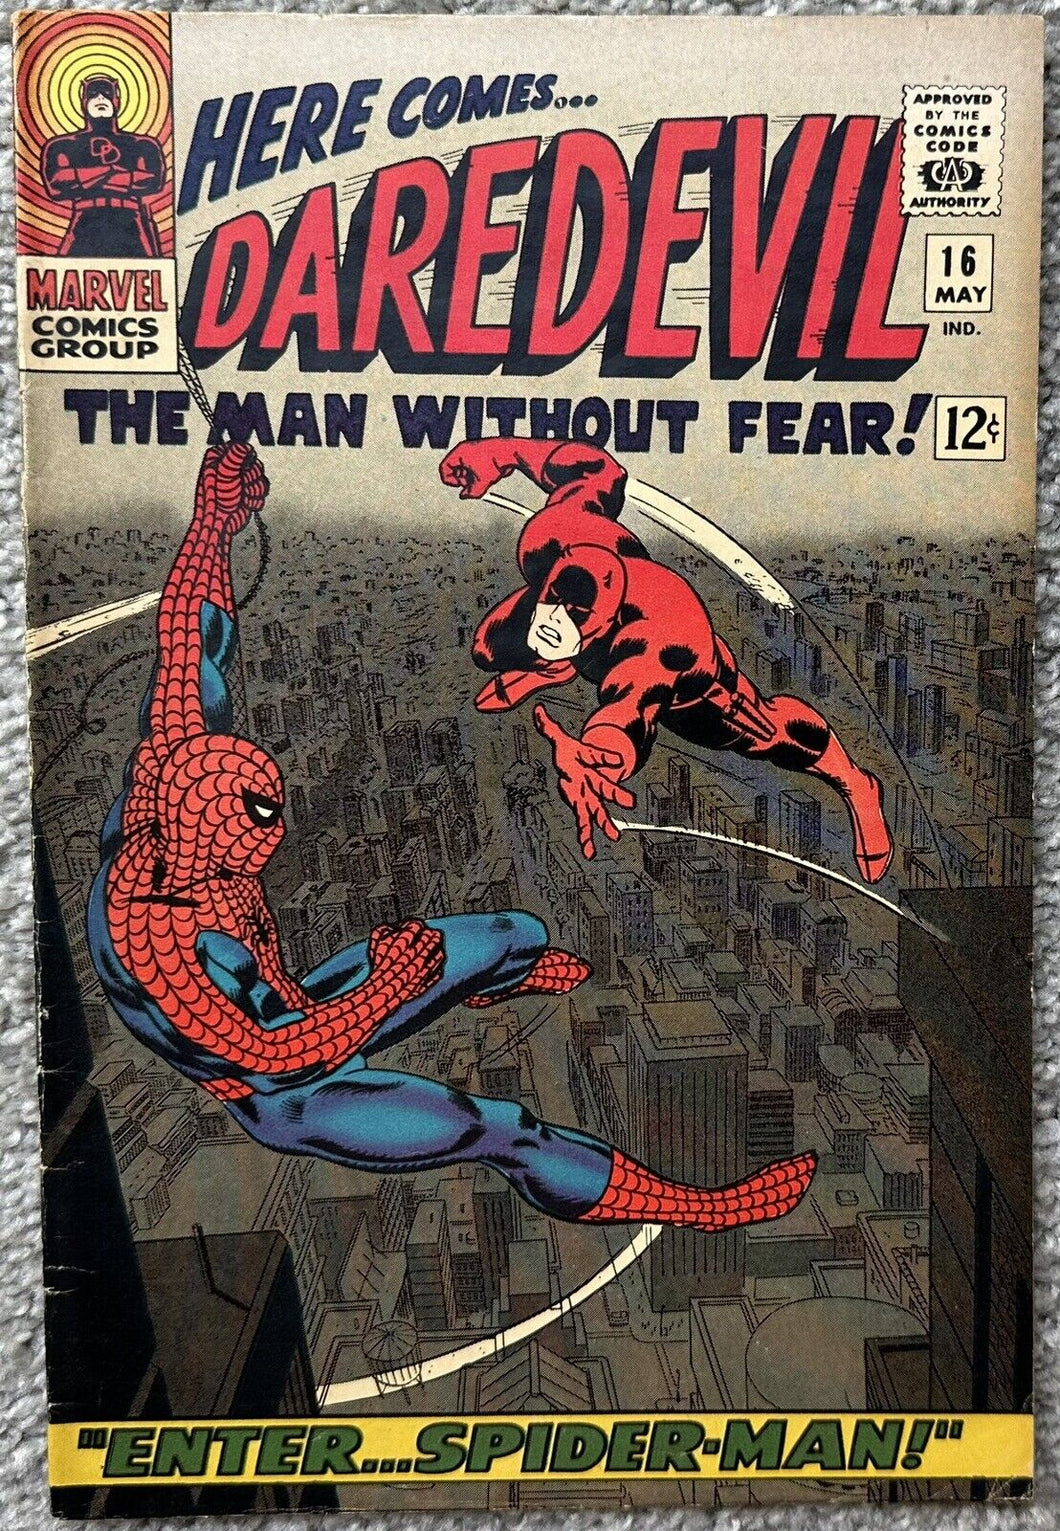 DAREDEVIL #16 (MARVEL,1966) Spider-Man app. 1st app. of the Masked Marauder